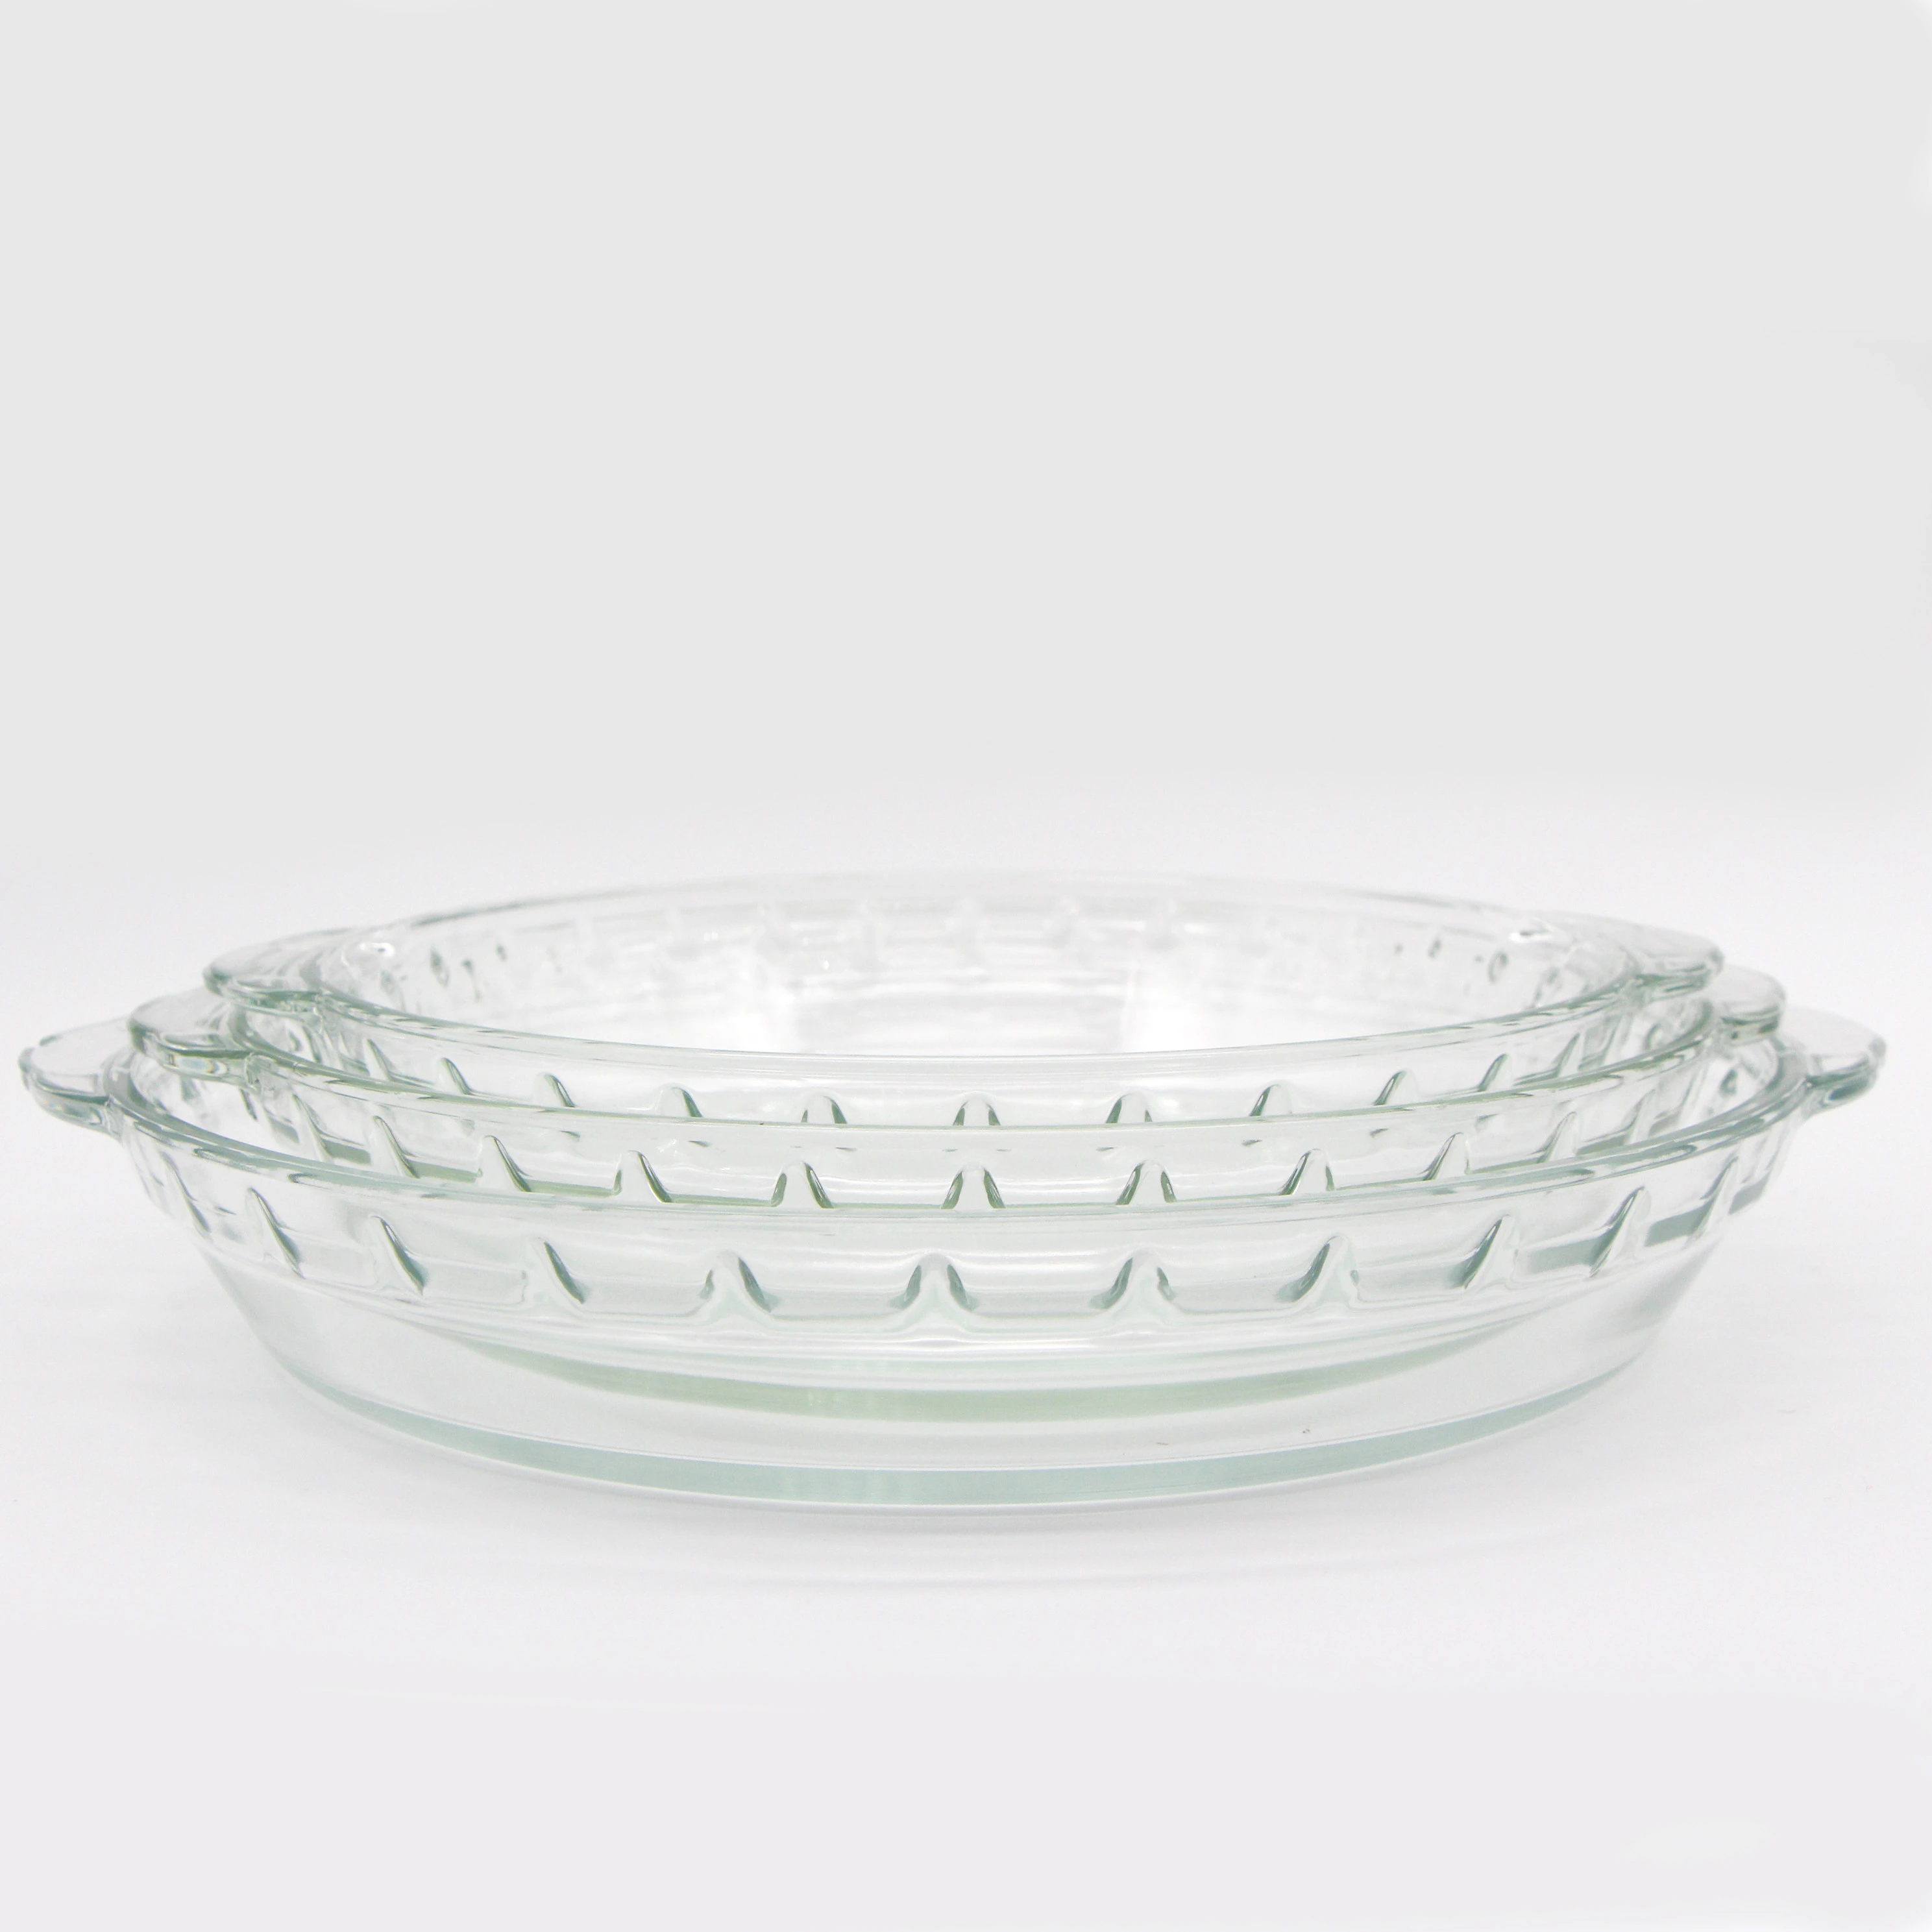 Oven Safe Borosilicate Glass Kitchen Baking Dish glass baking tray pie pans